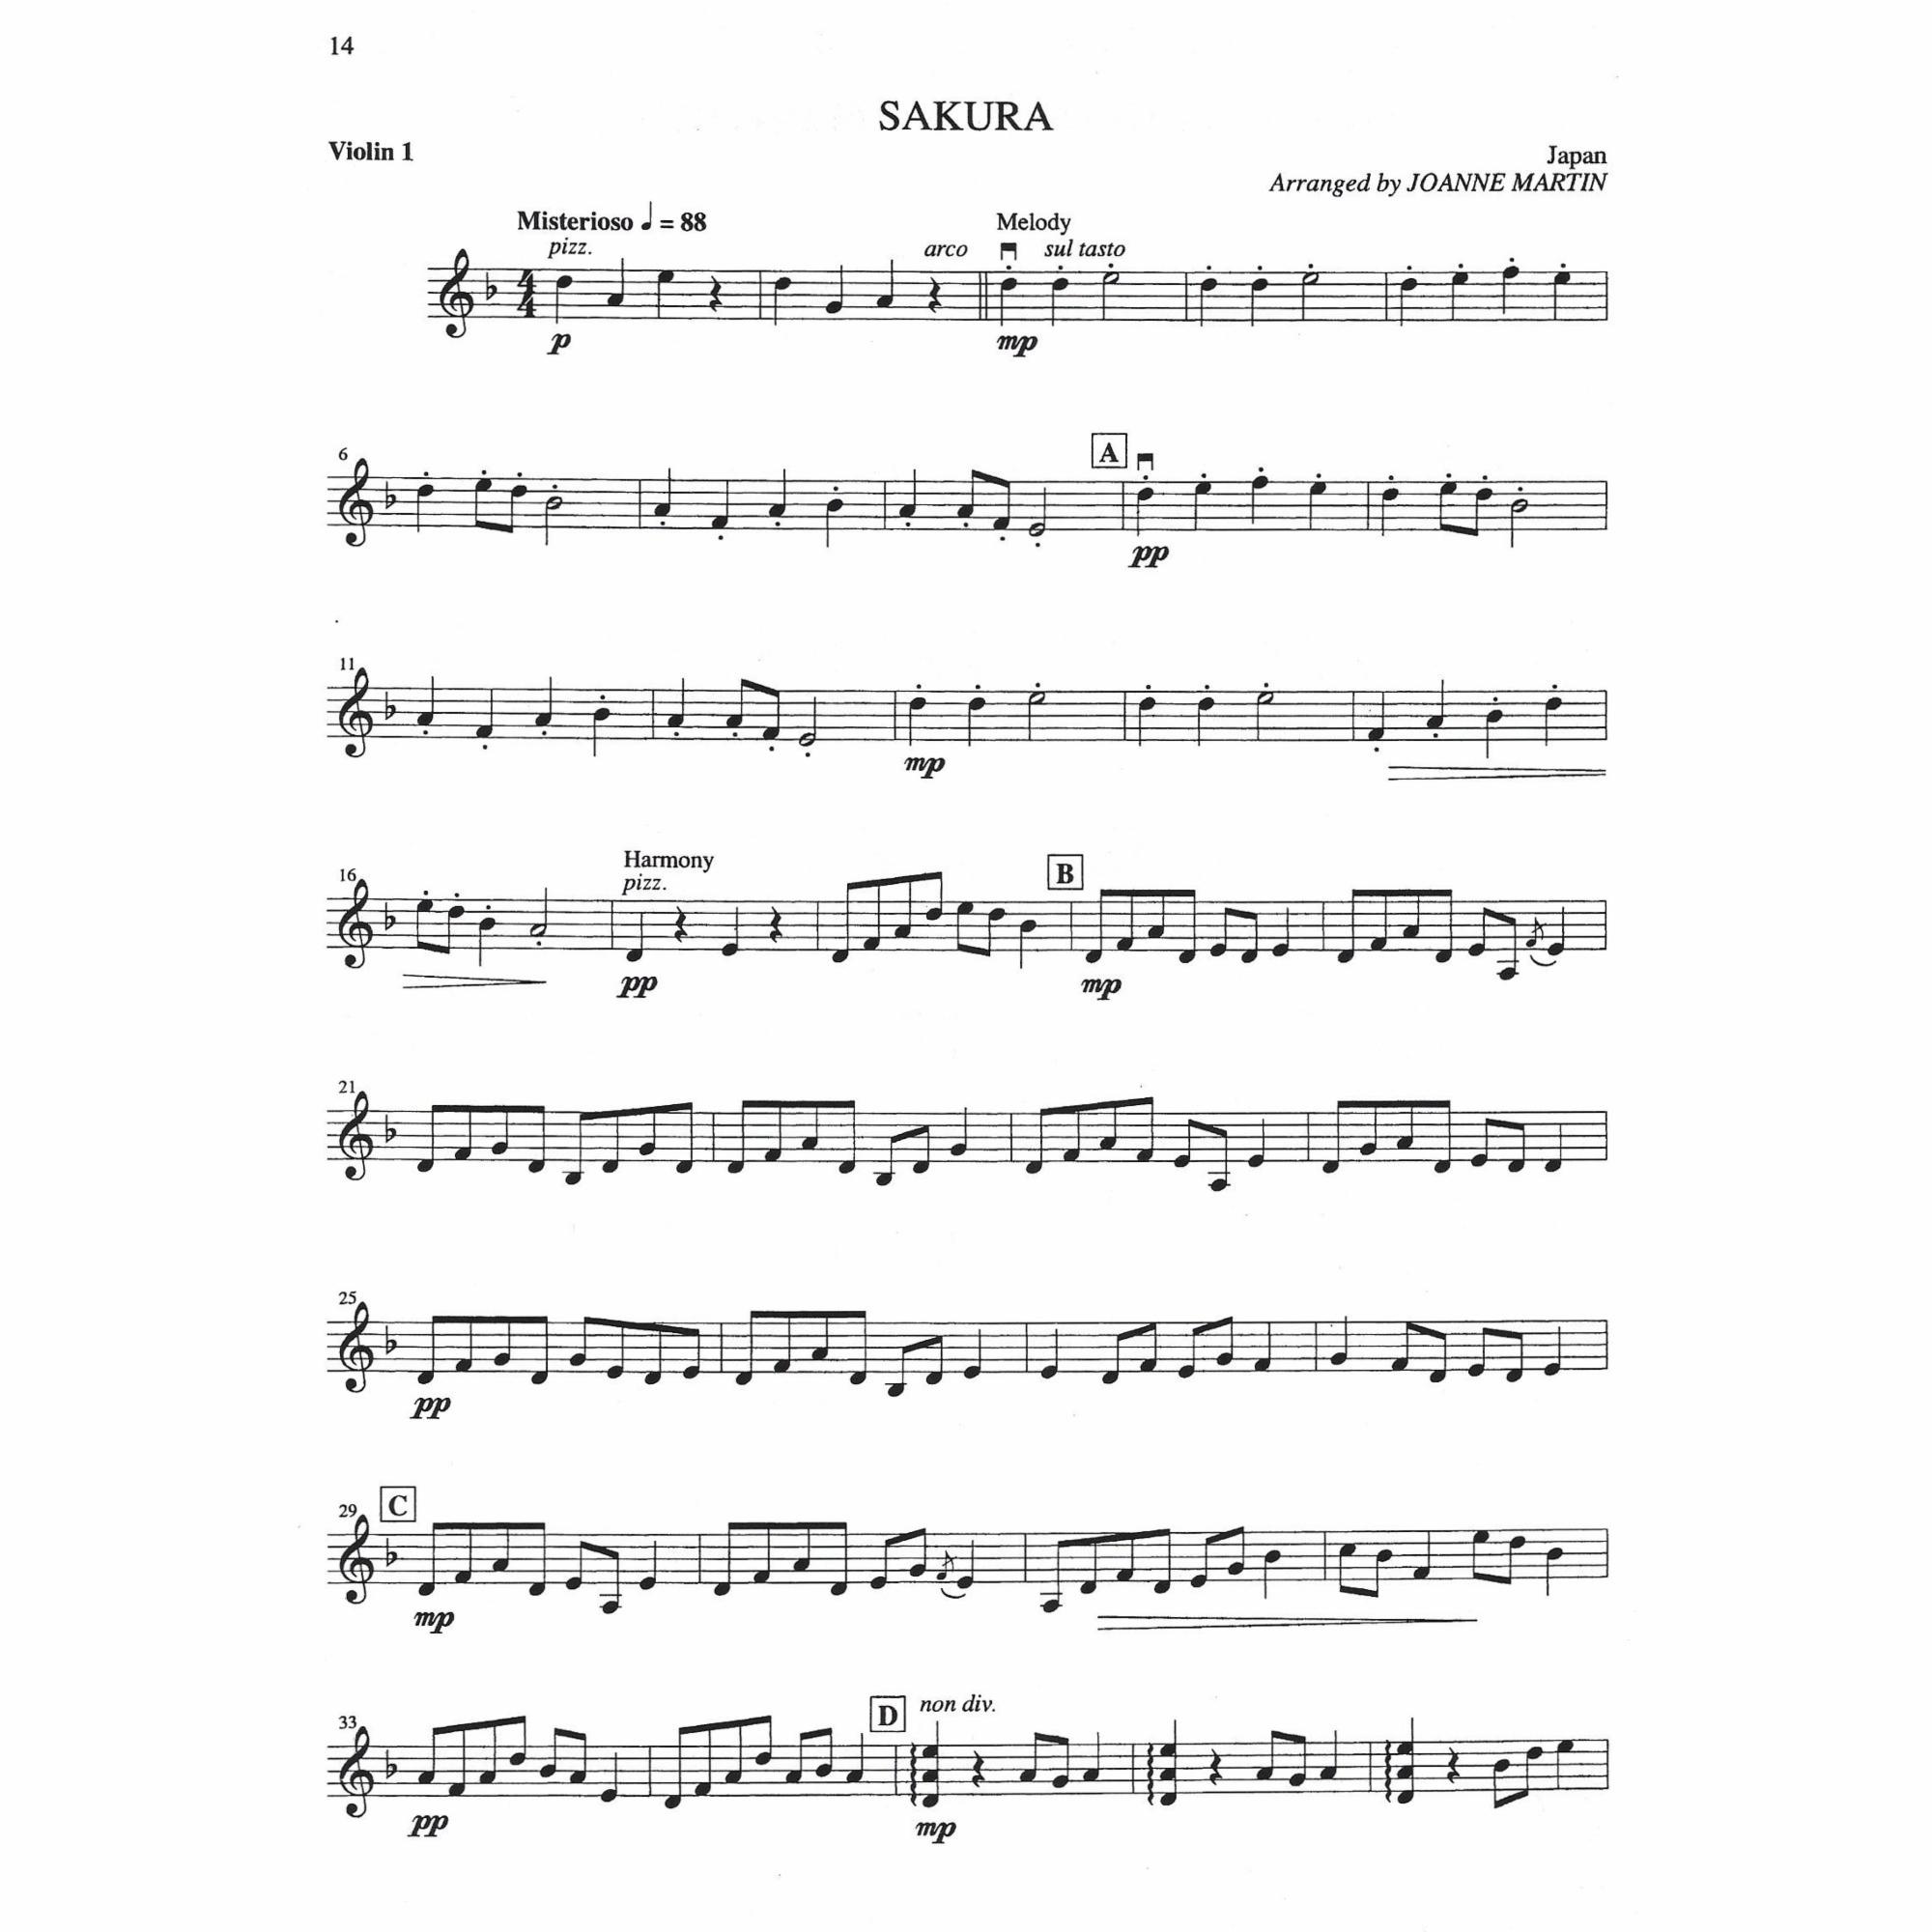 Sample: First Violin (Pg. 14)